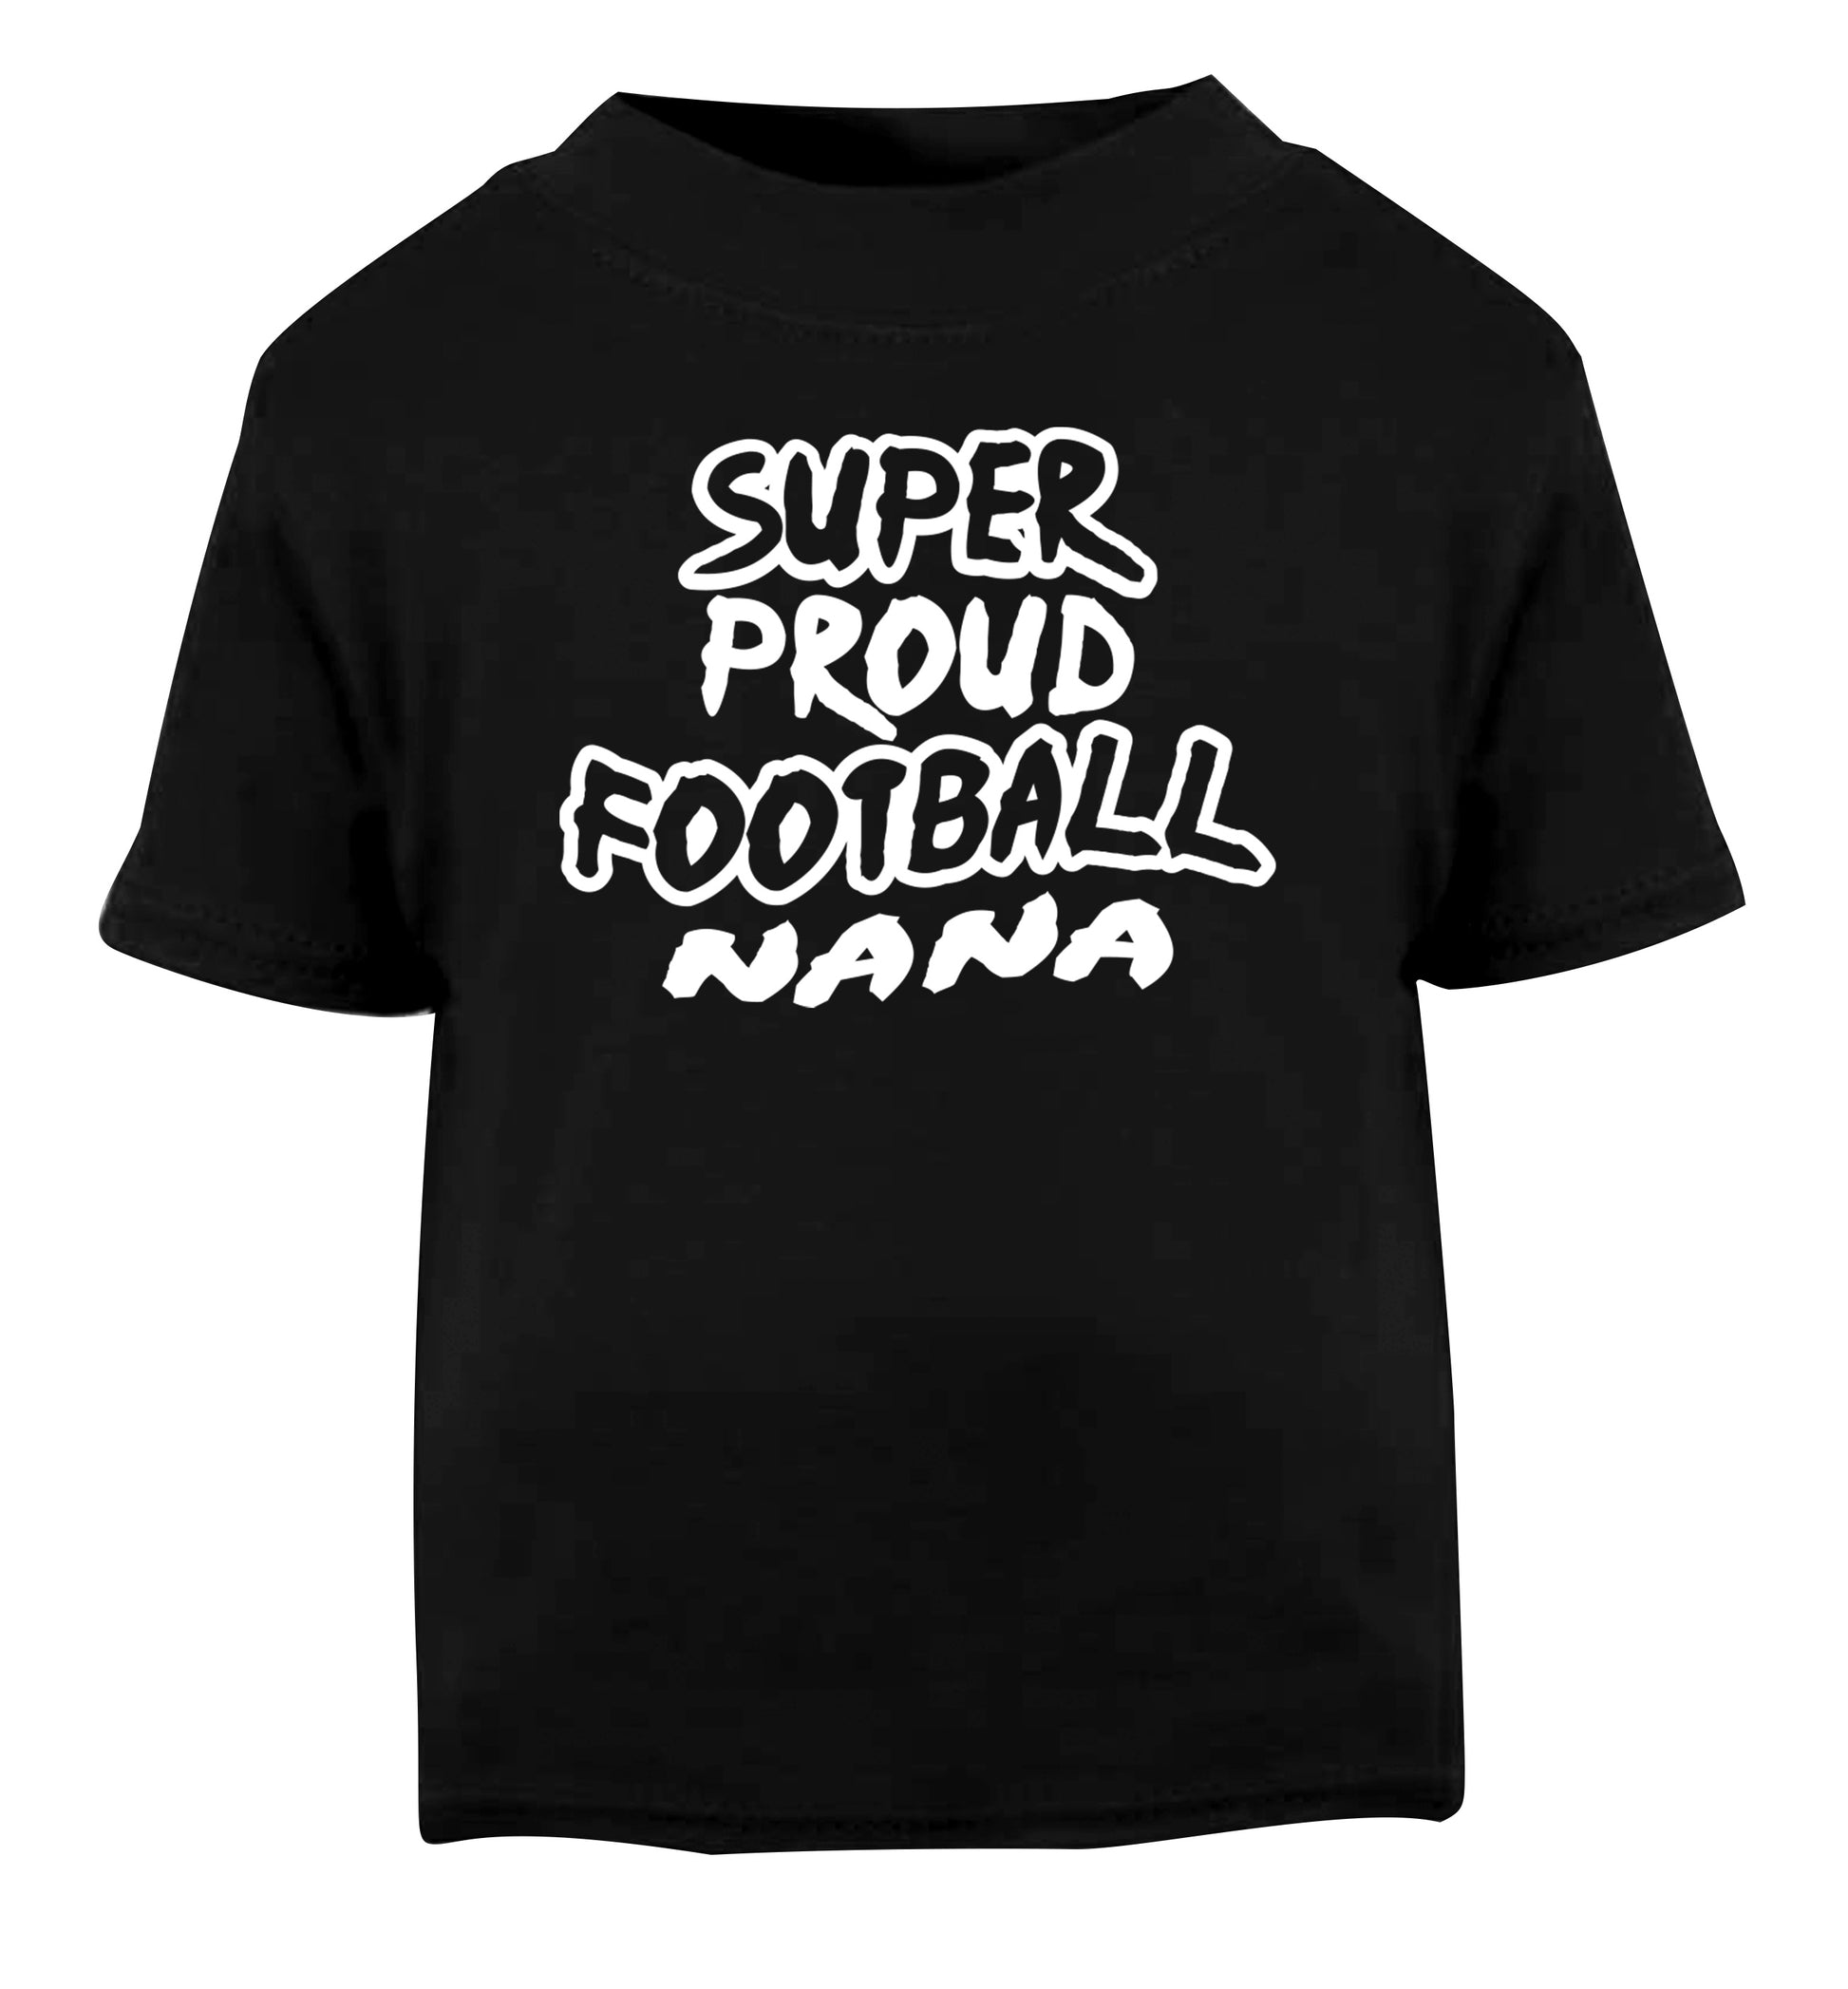 Super proud football nana Black Baby Toddler Tshirt 2 years